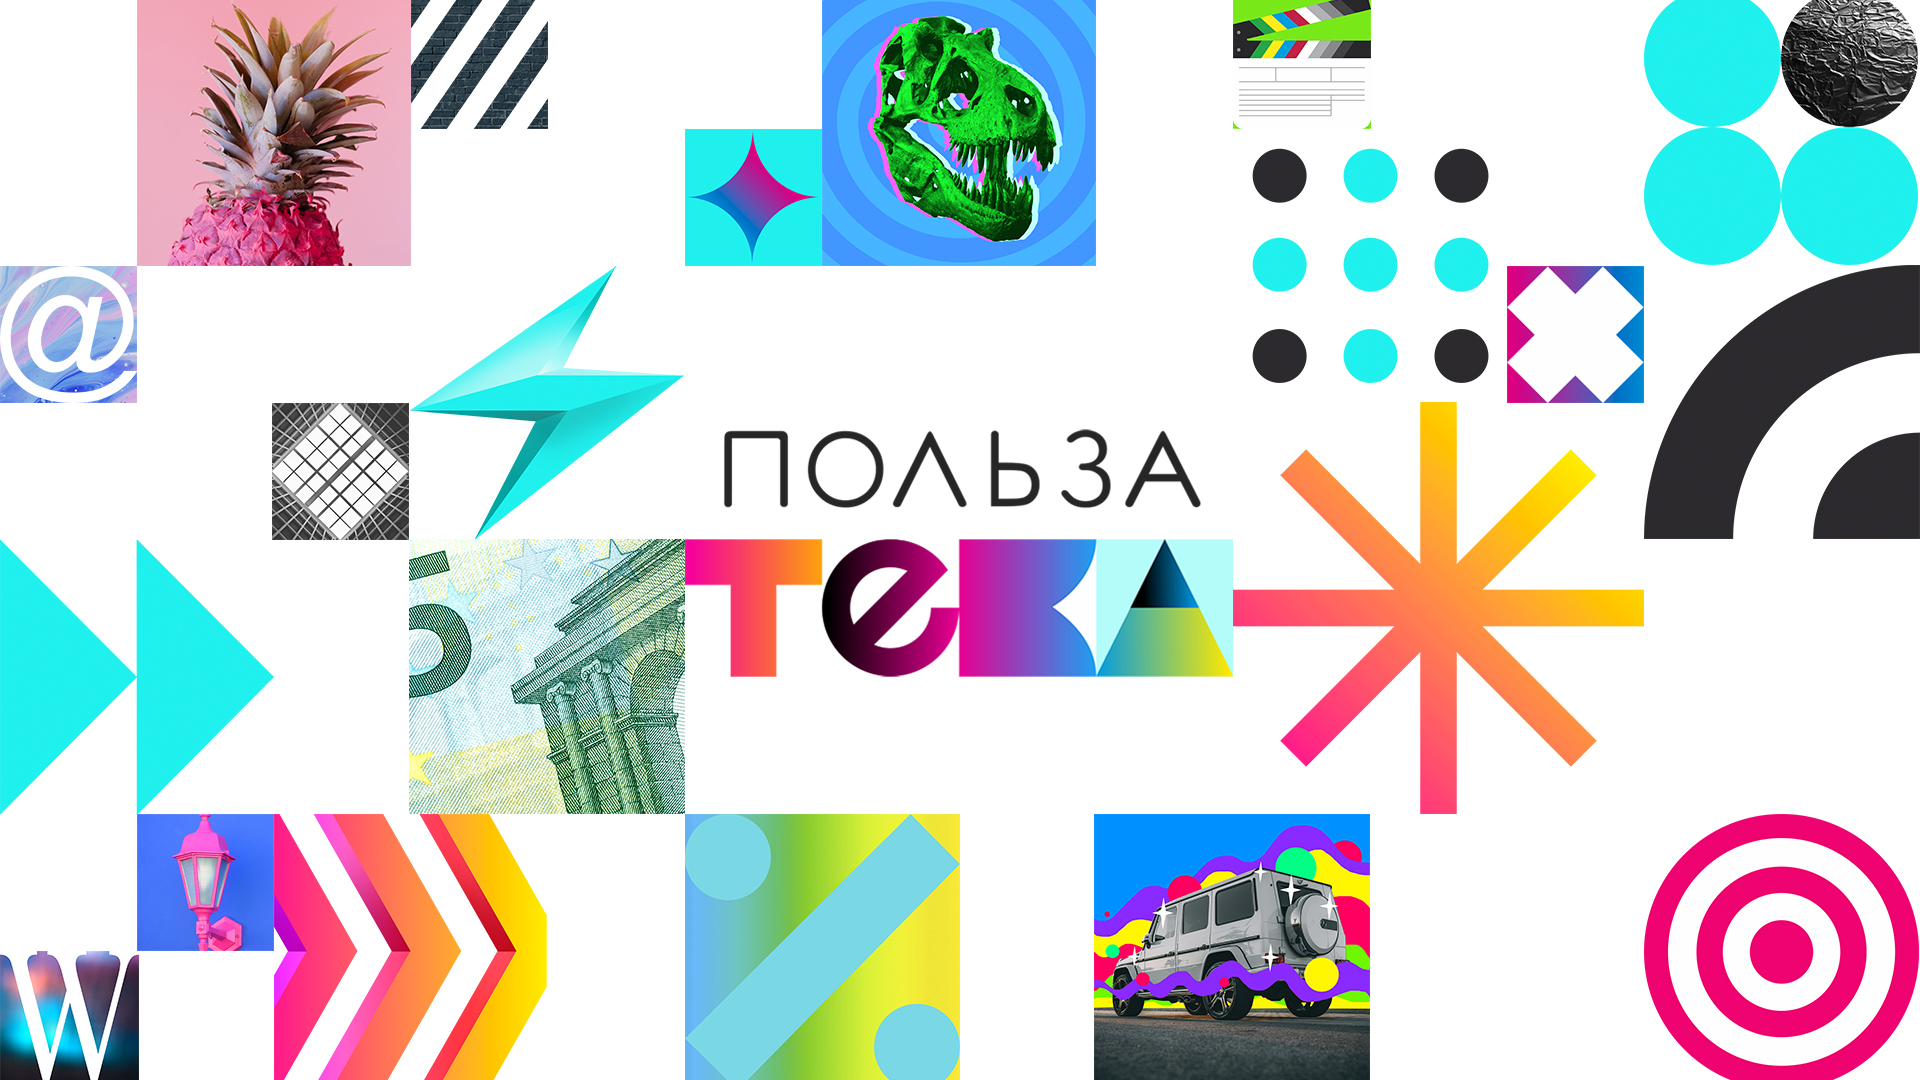 Polzateka Online Education Platform Created by Clubnik